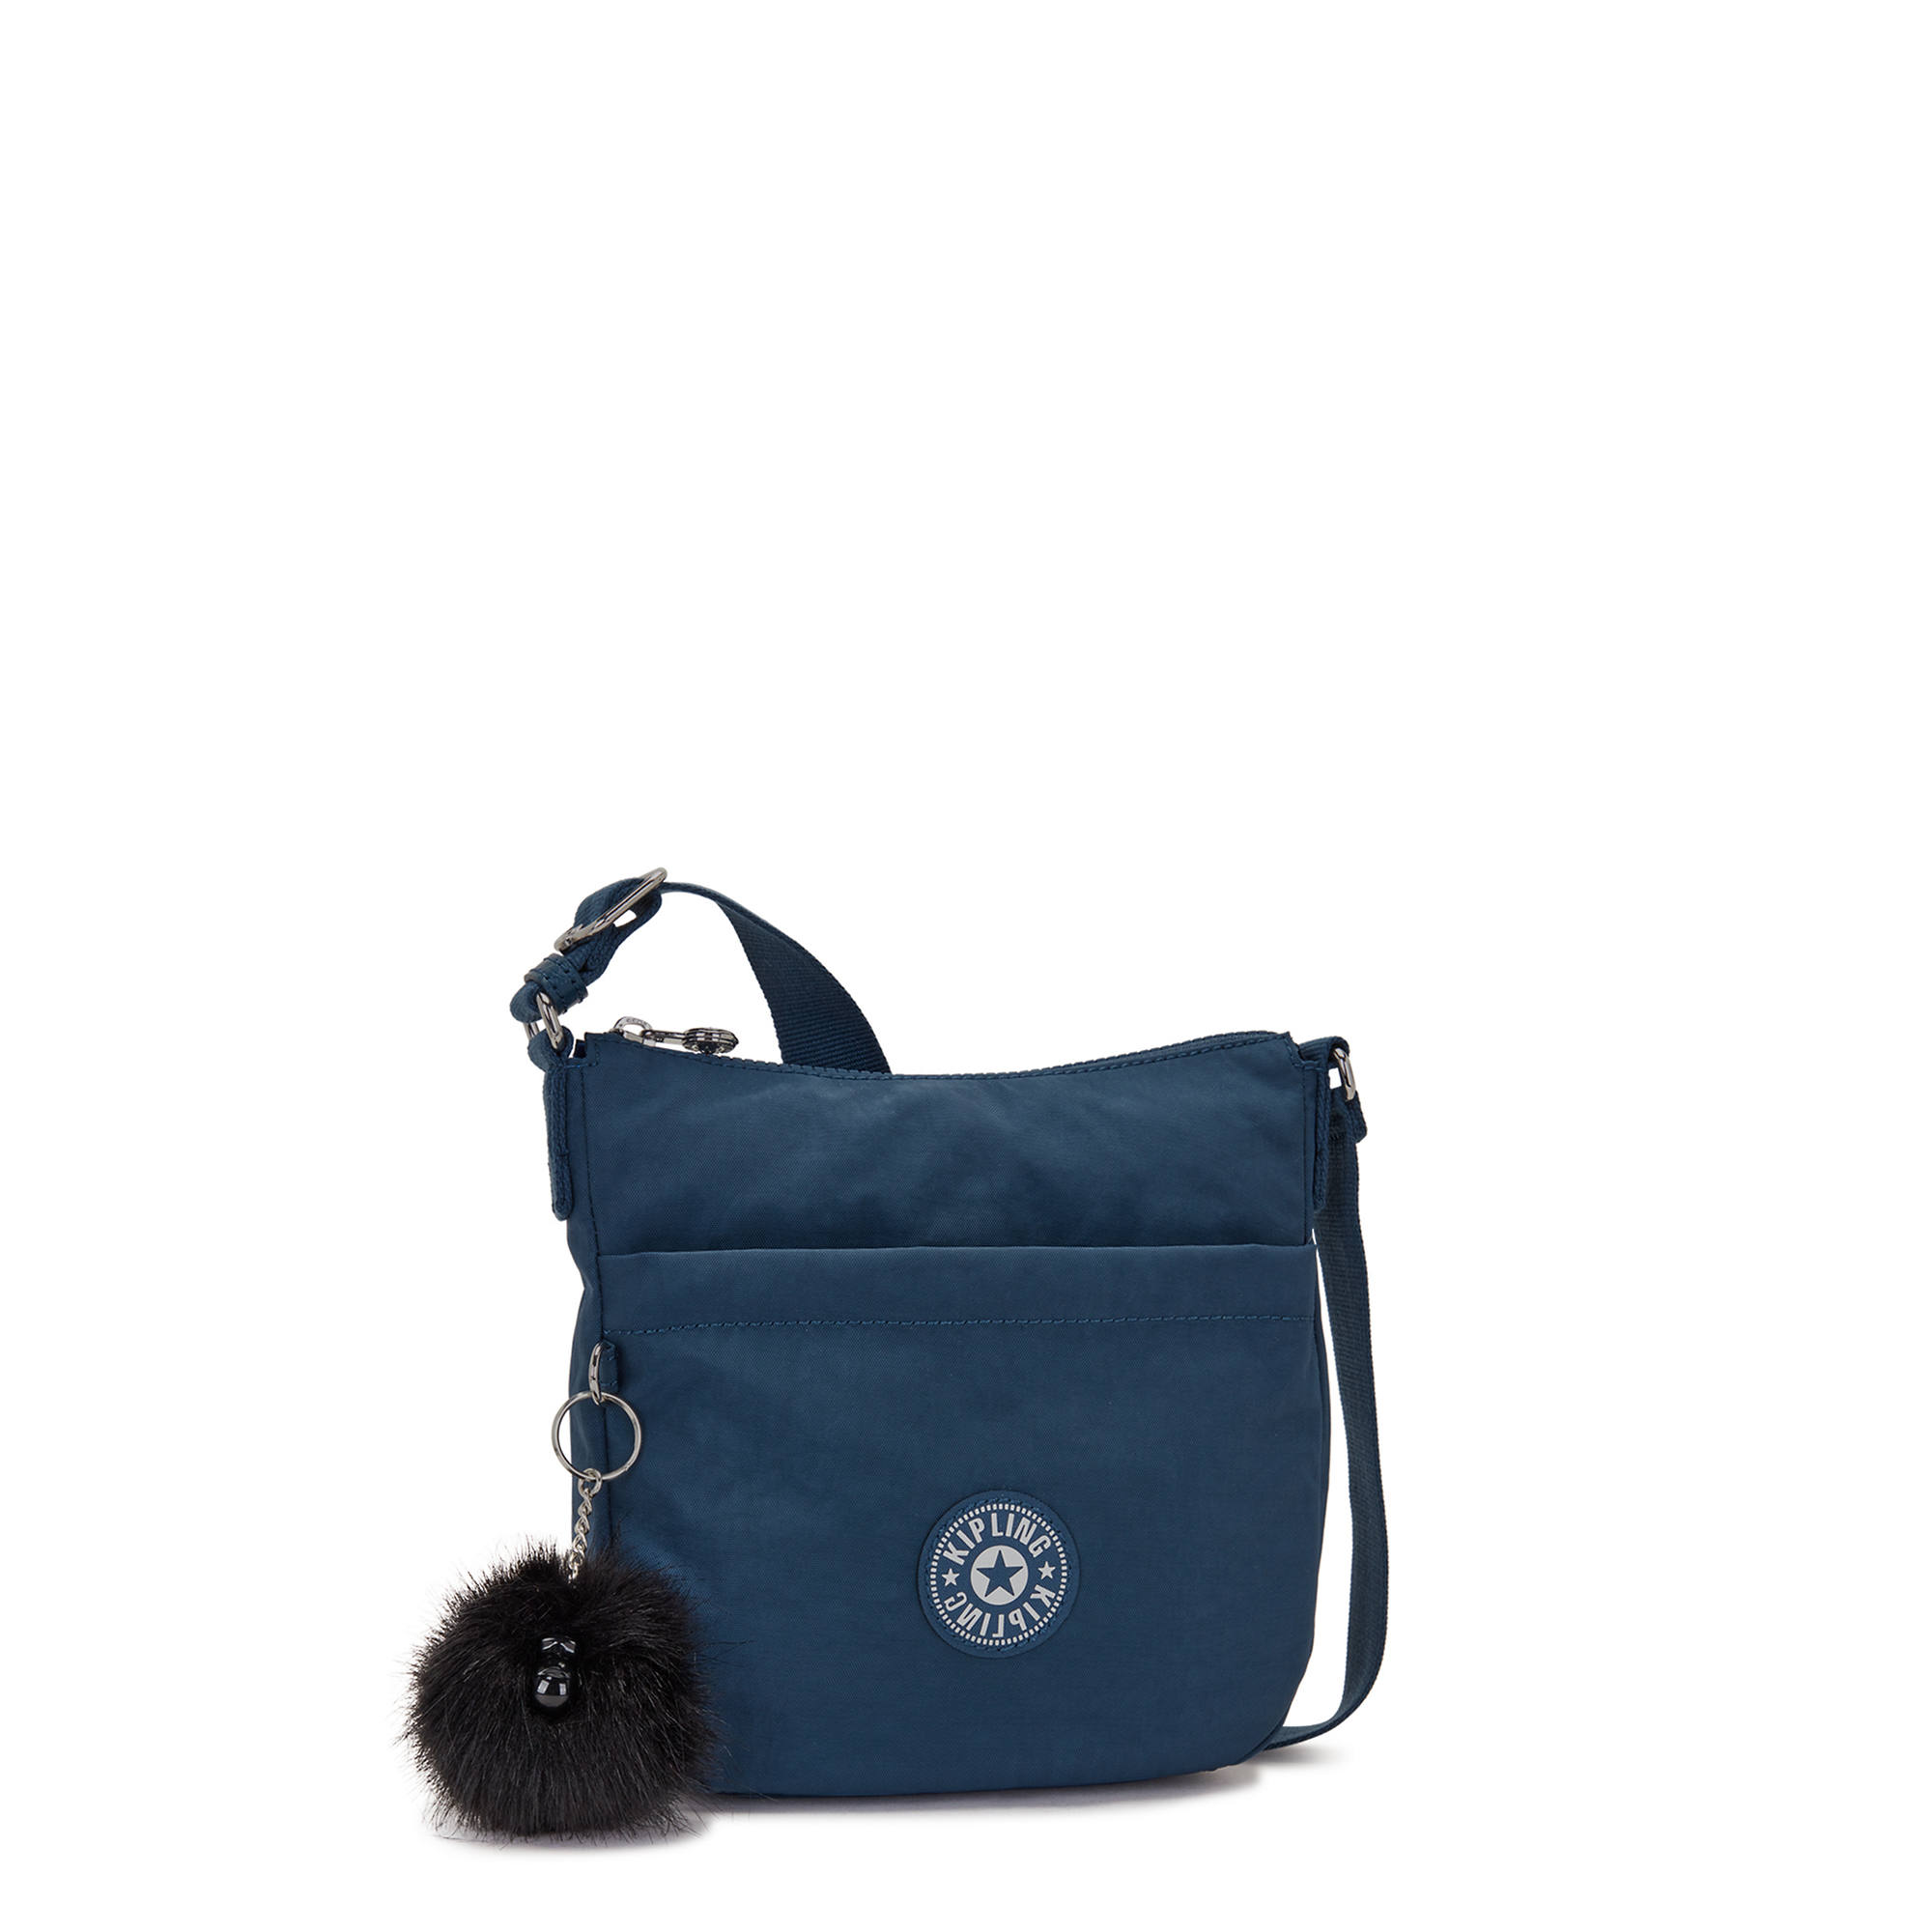 Kipling Libbie Crossbody Bag | eBay